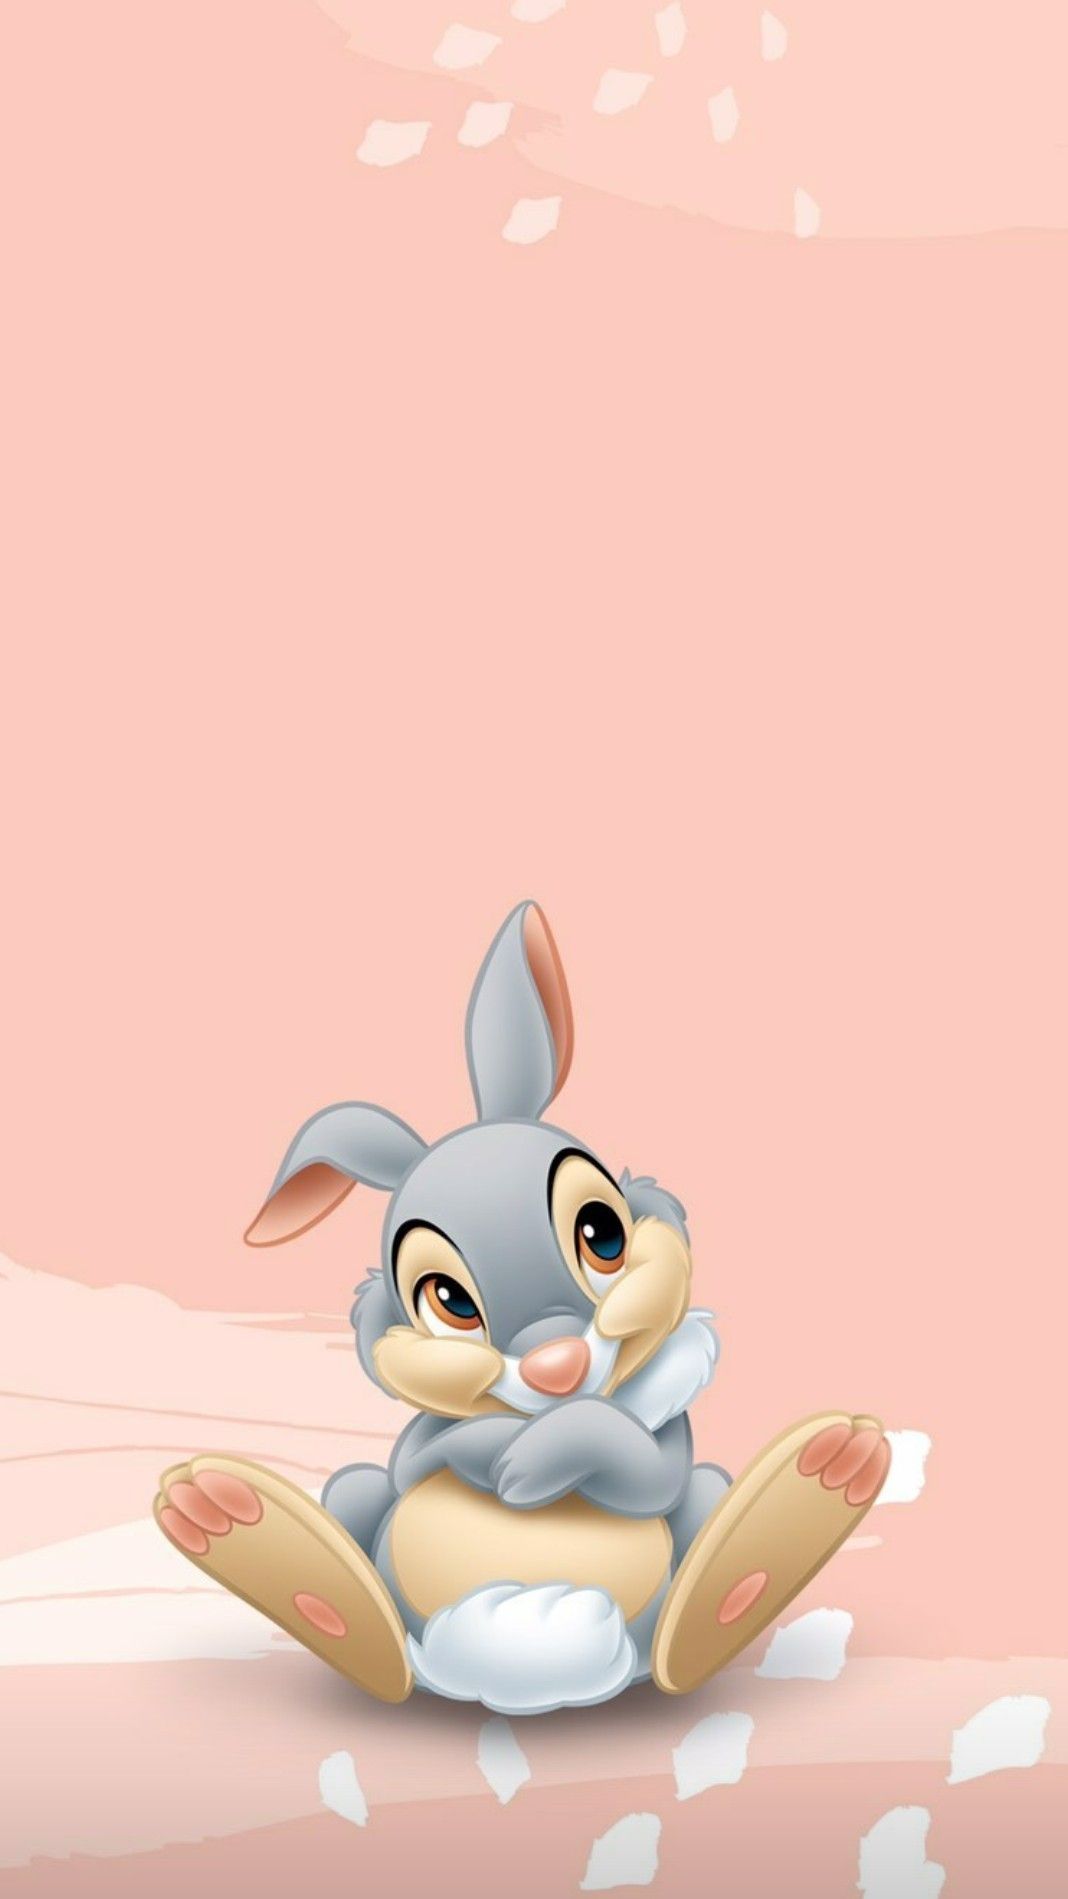 Thumper (Bambi). Cute cartoon wallpaper, Disney wallpaper, Disney paper dolls